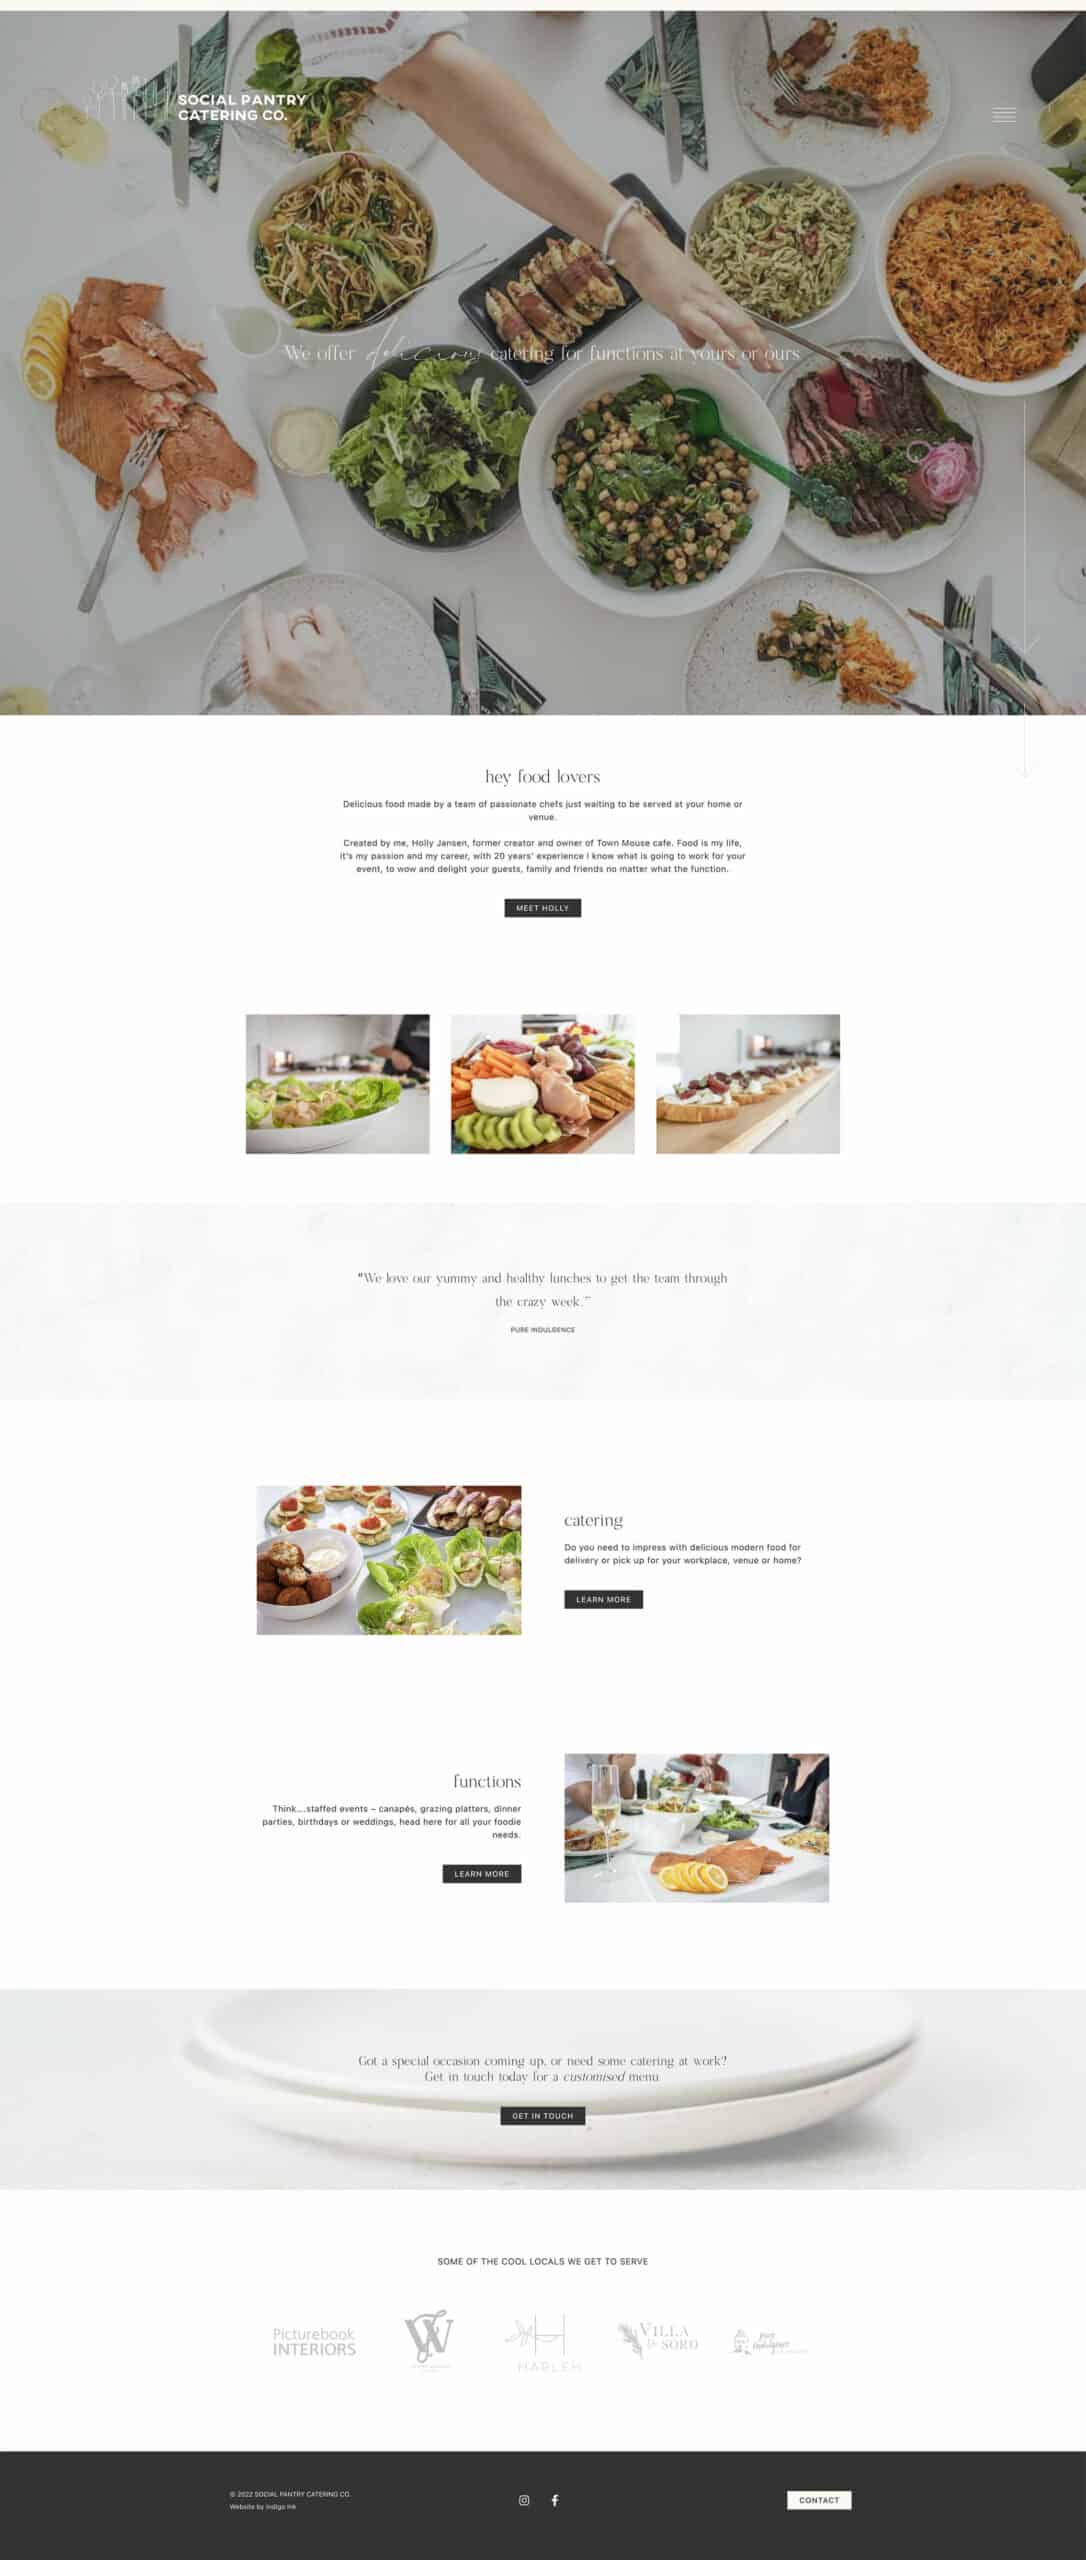 website design – social pantry catering